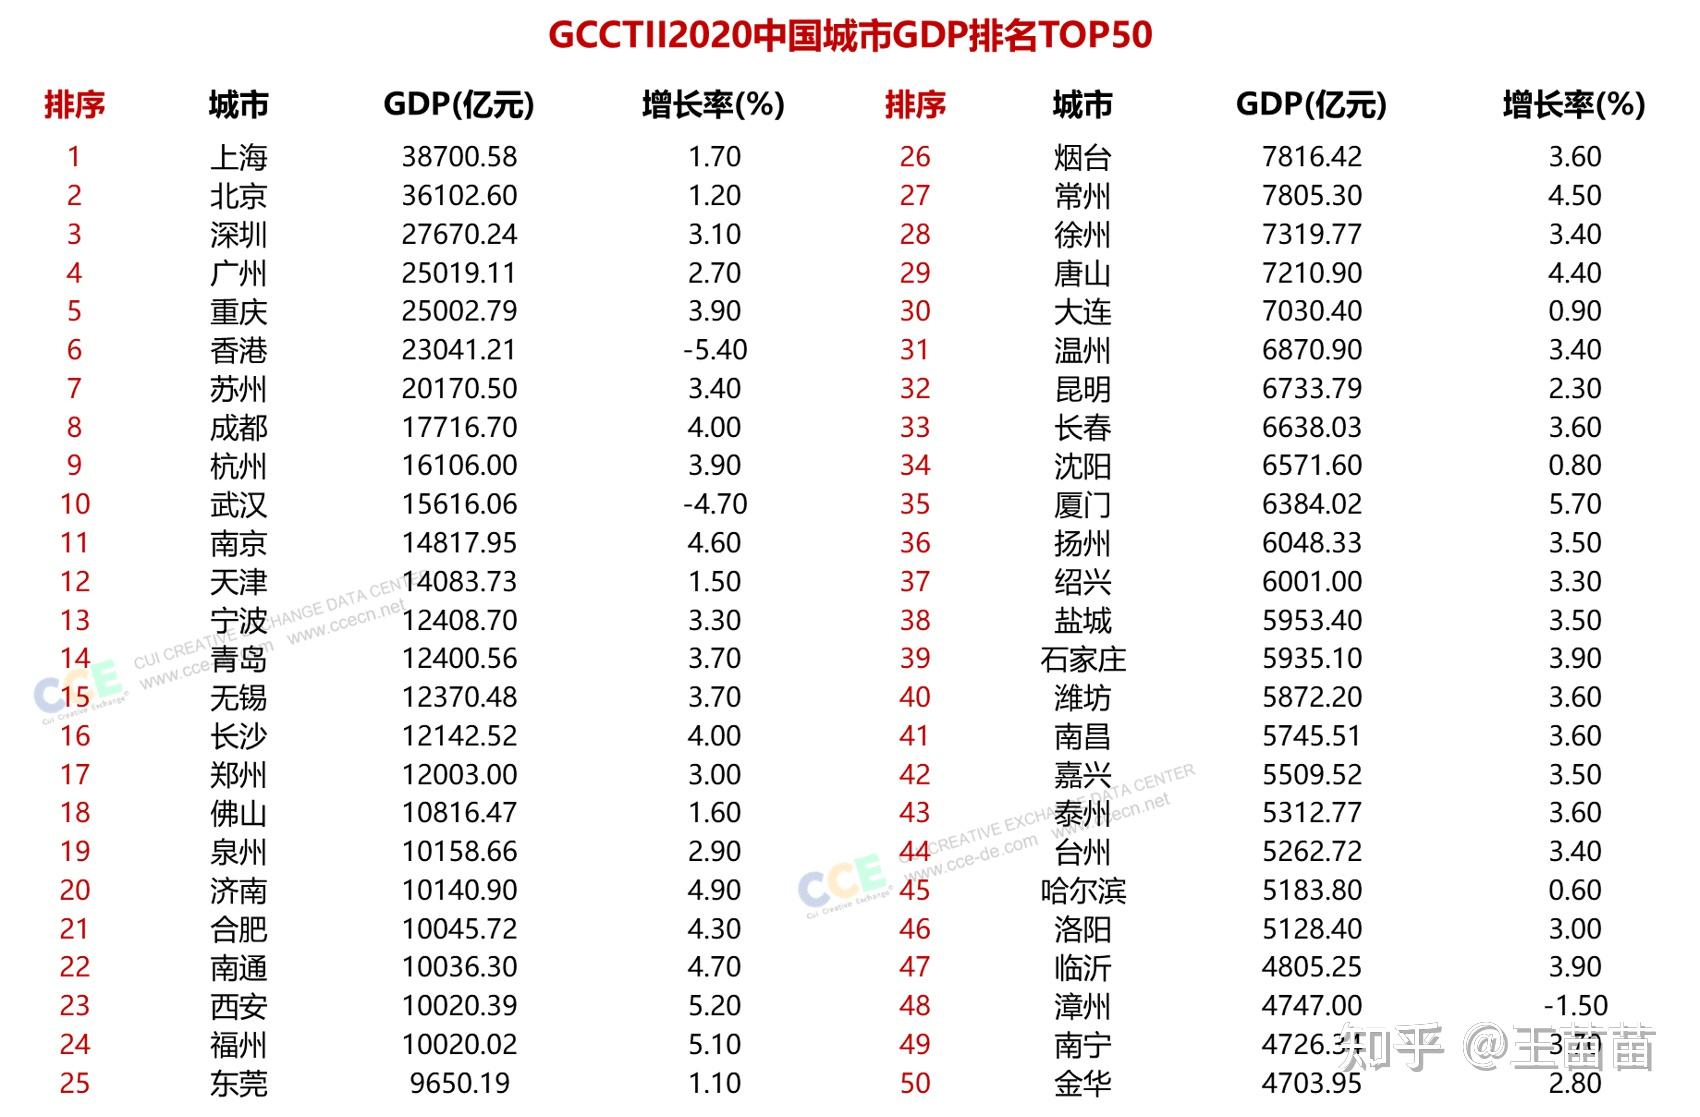 gcctii2020全球城市gdp排名&中国城市gdp排名